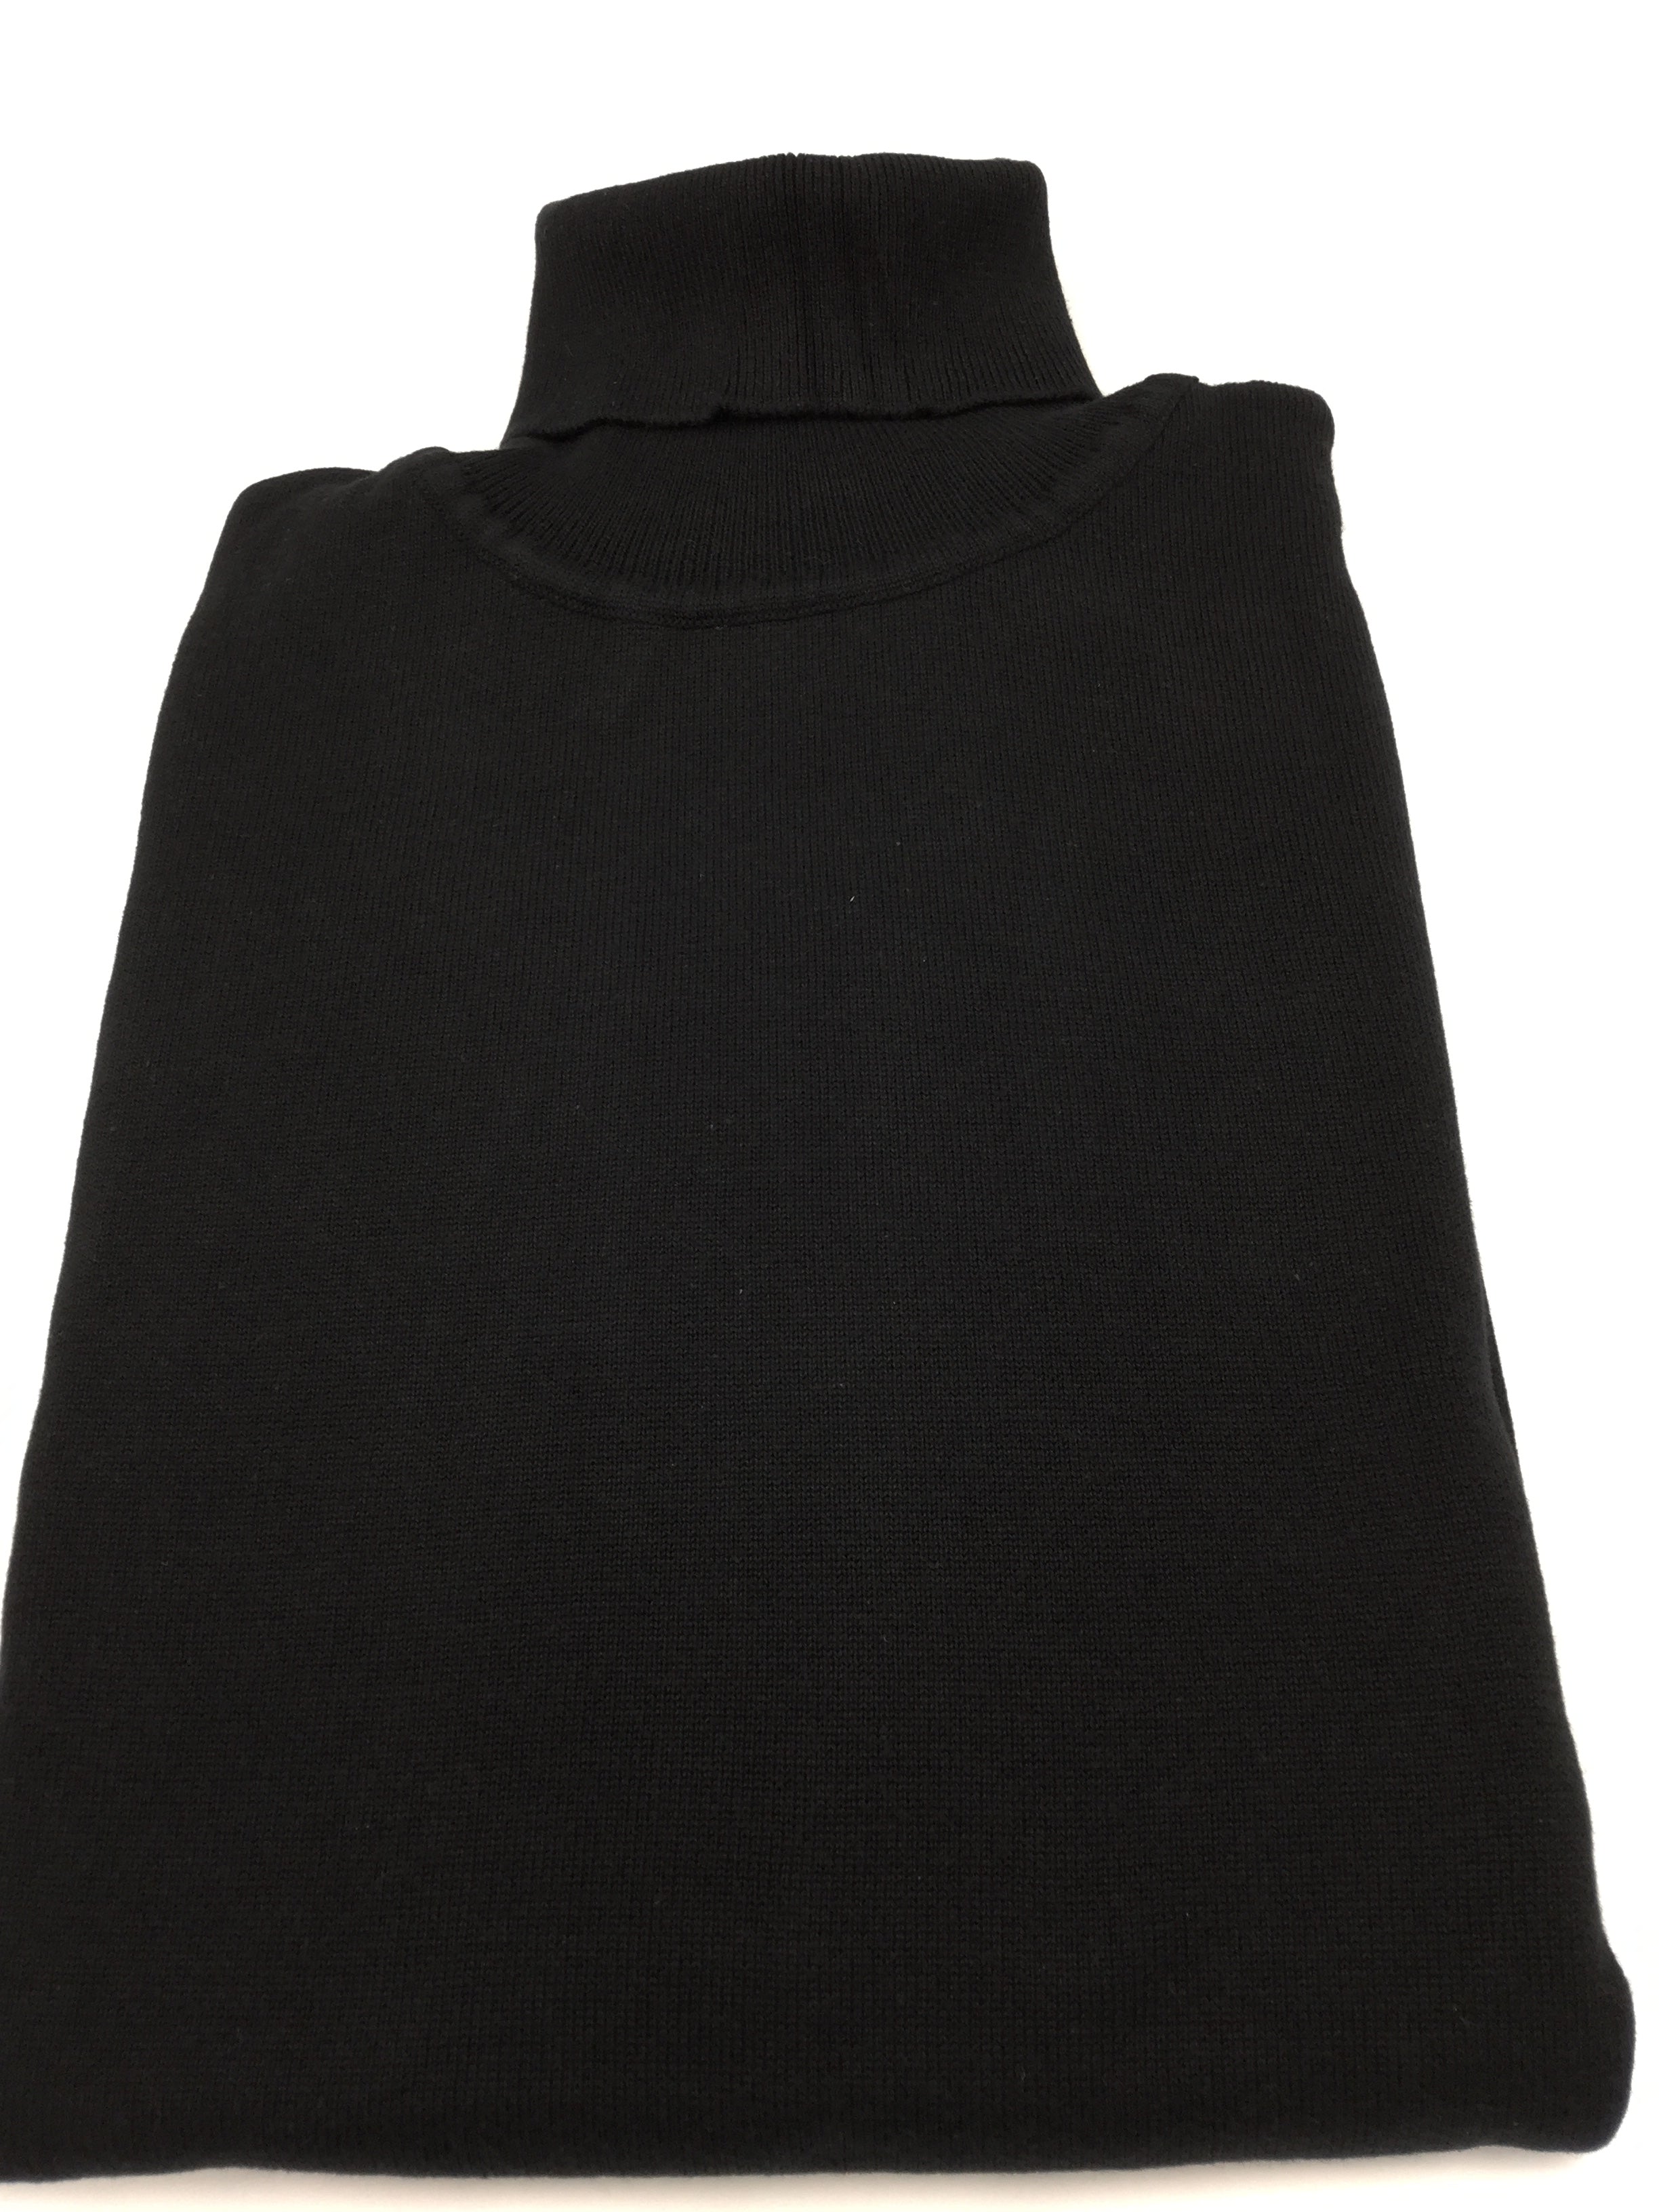 Bagazio black cotton blend turtleneck sweater shirt